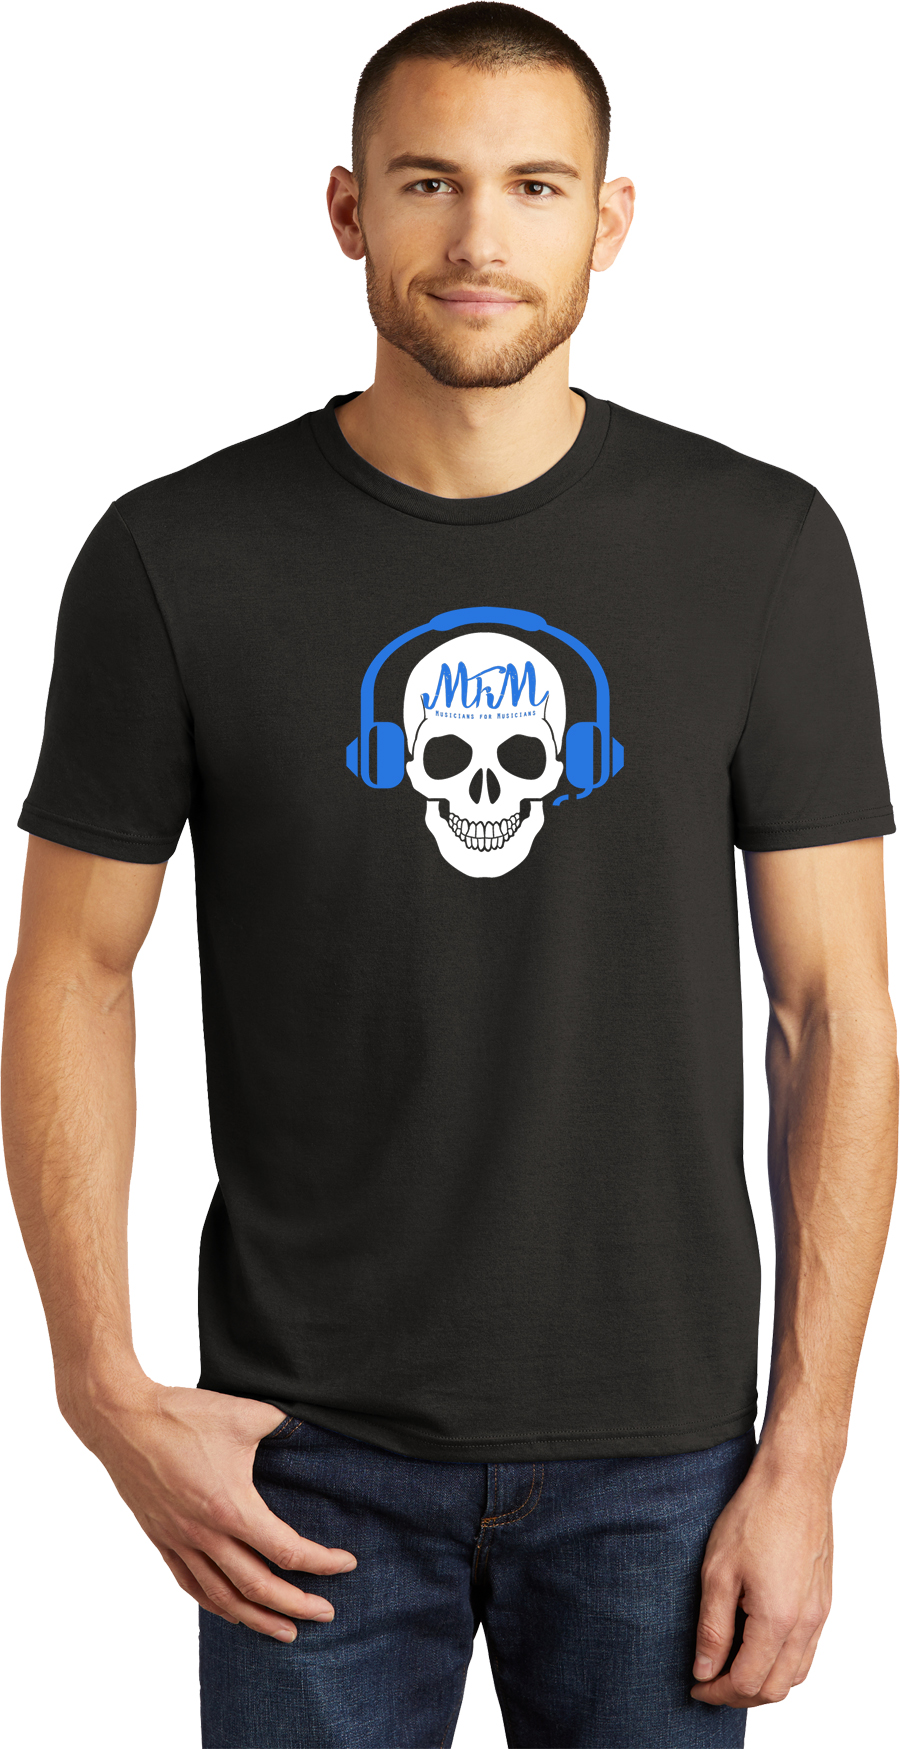 MFM Got A Nu T-Shirt On Sale! A Skull?!